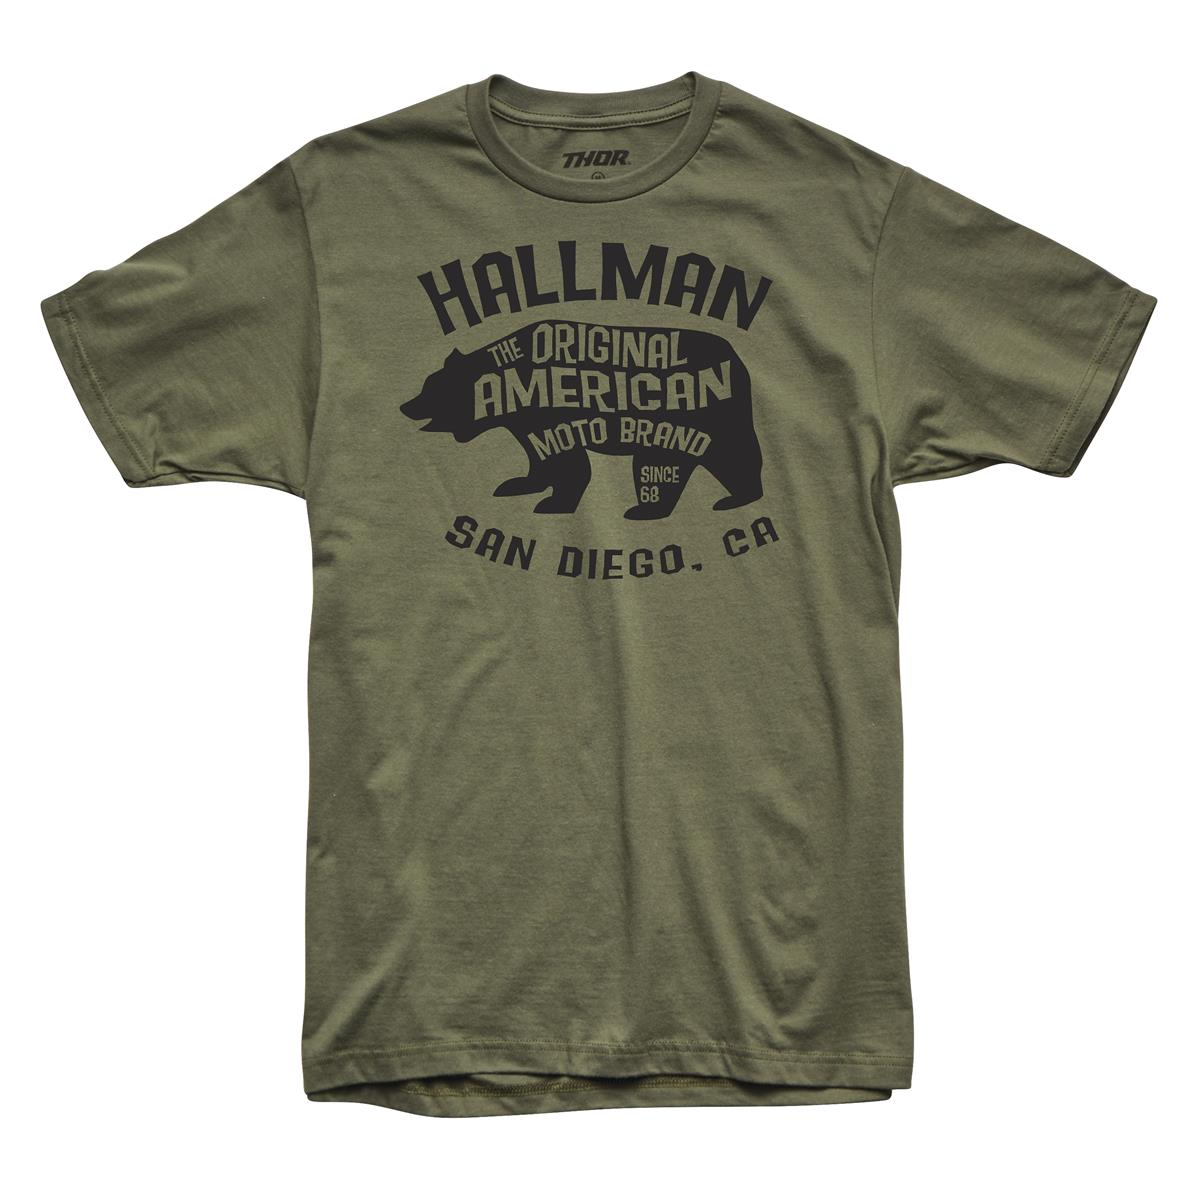 Thor T-Shirt Hallman Merica - Green